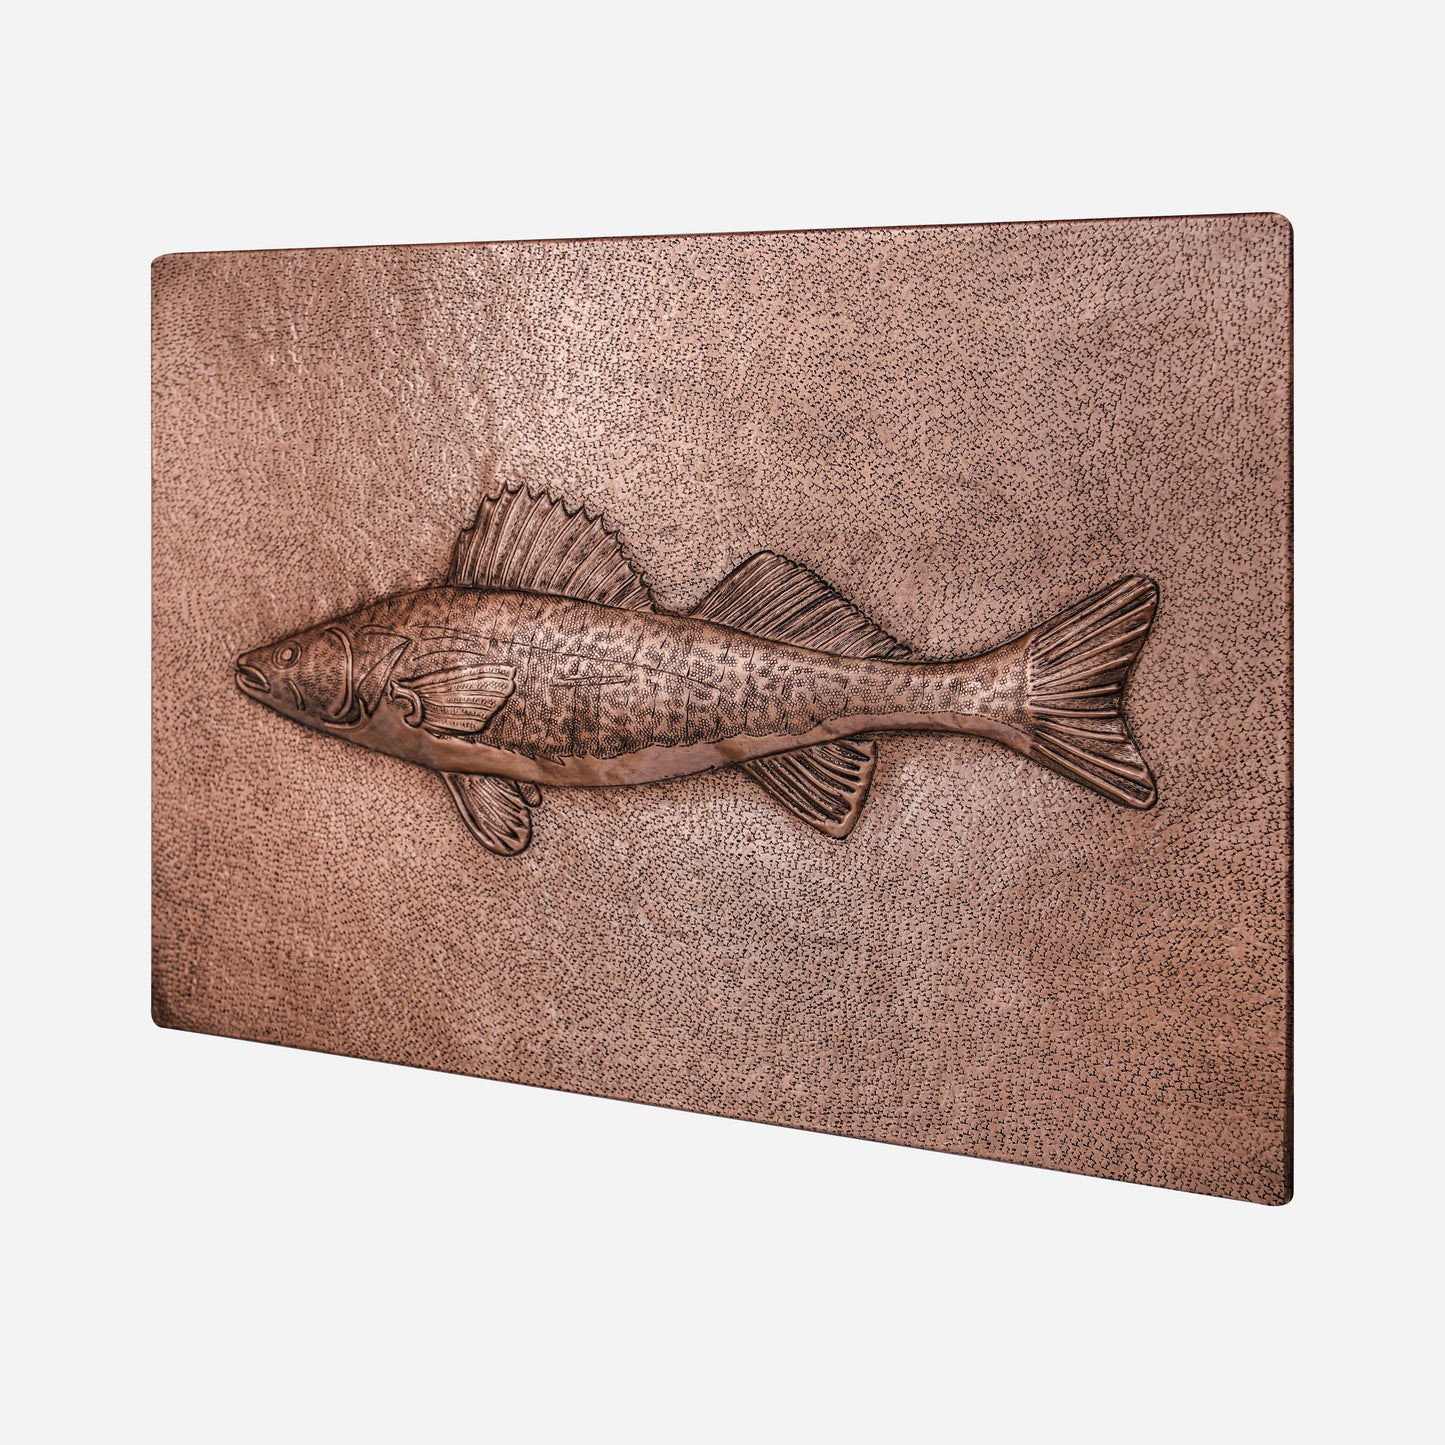 Copper Backsplash Panel (Striped Bass Fish)